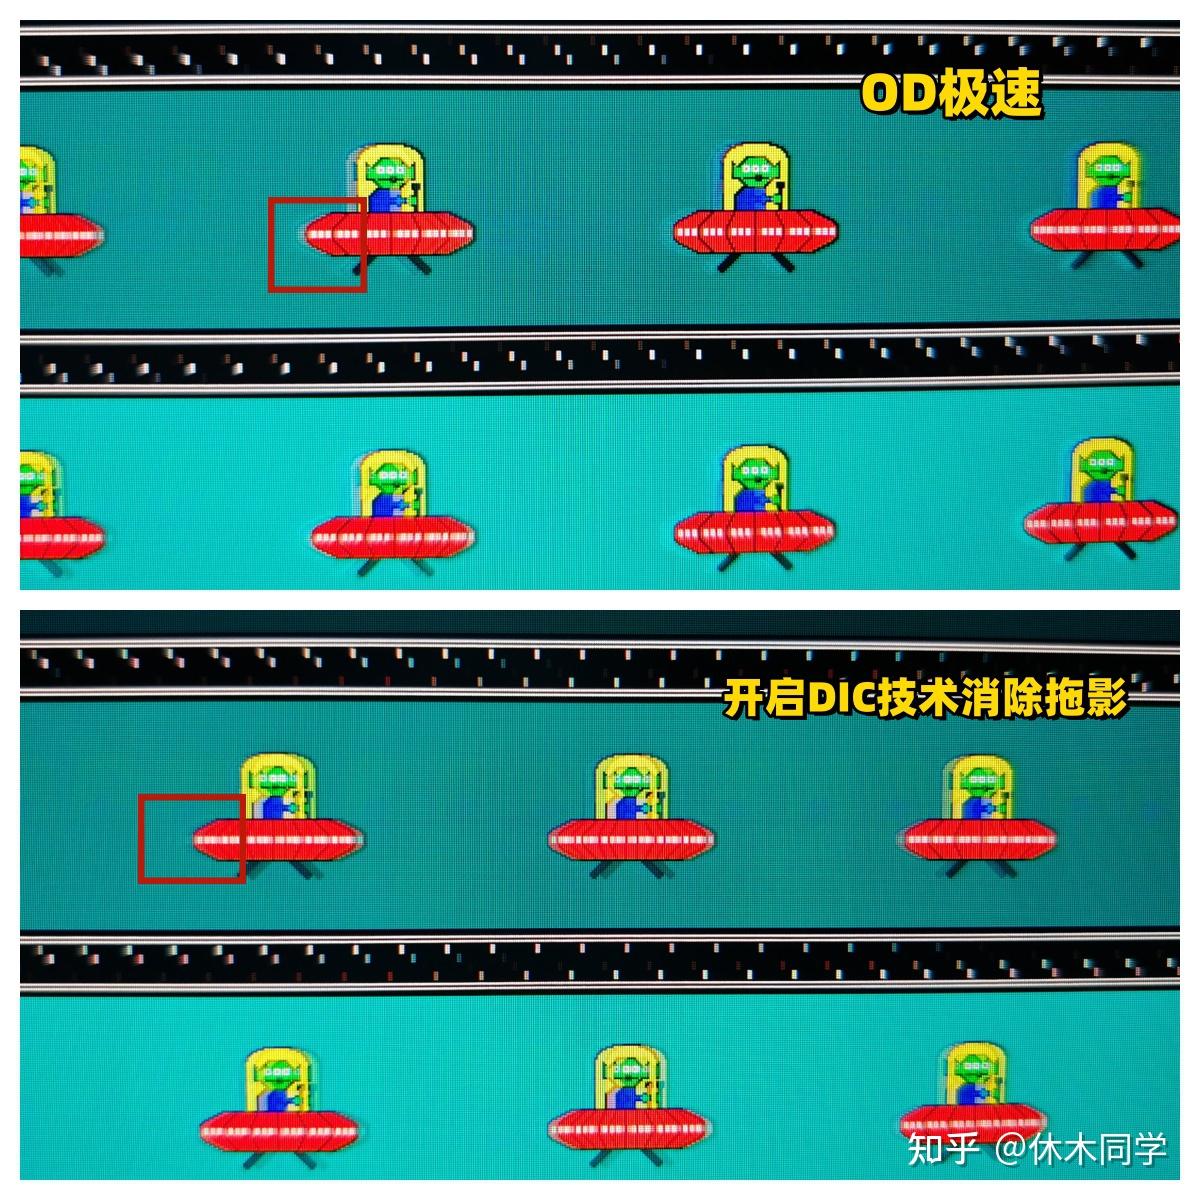 DDR400 内存条：重温大屁股显示器时代的速度与激情  第1张